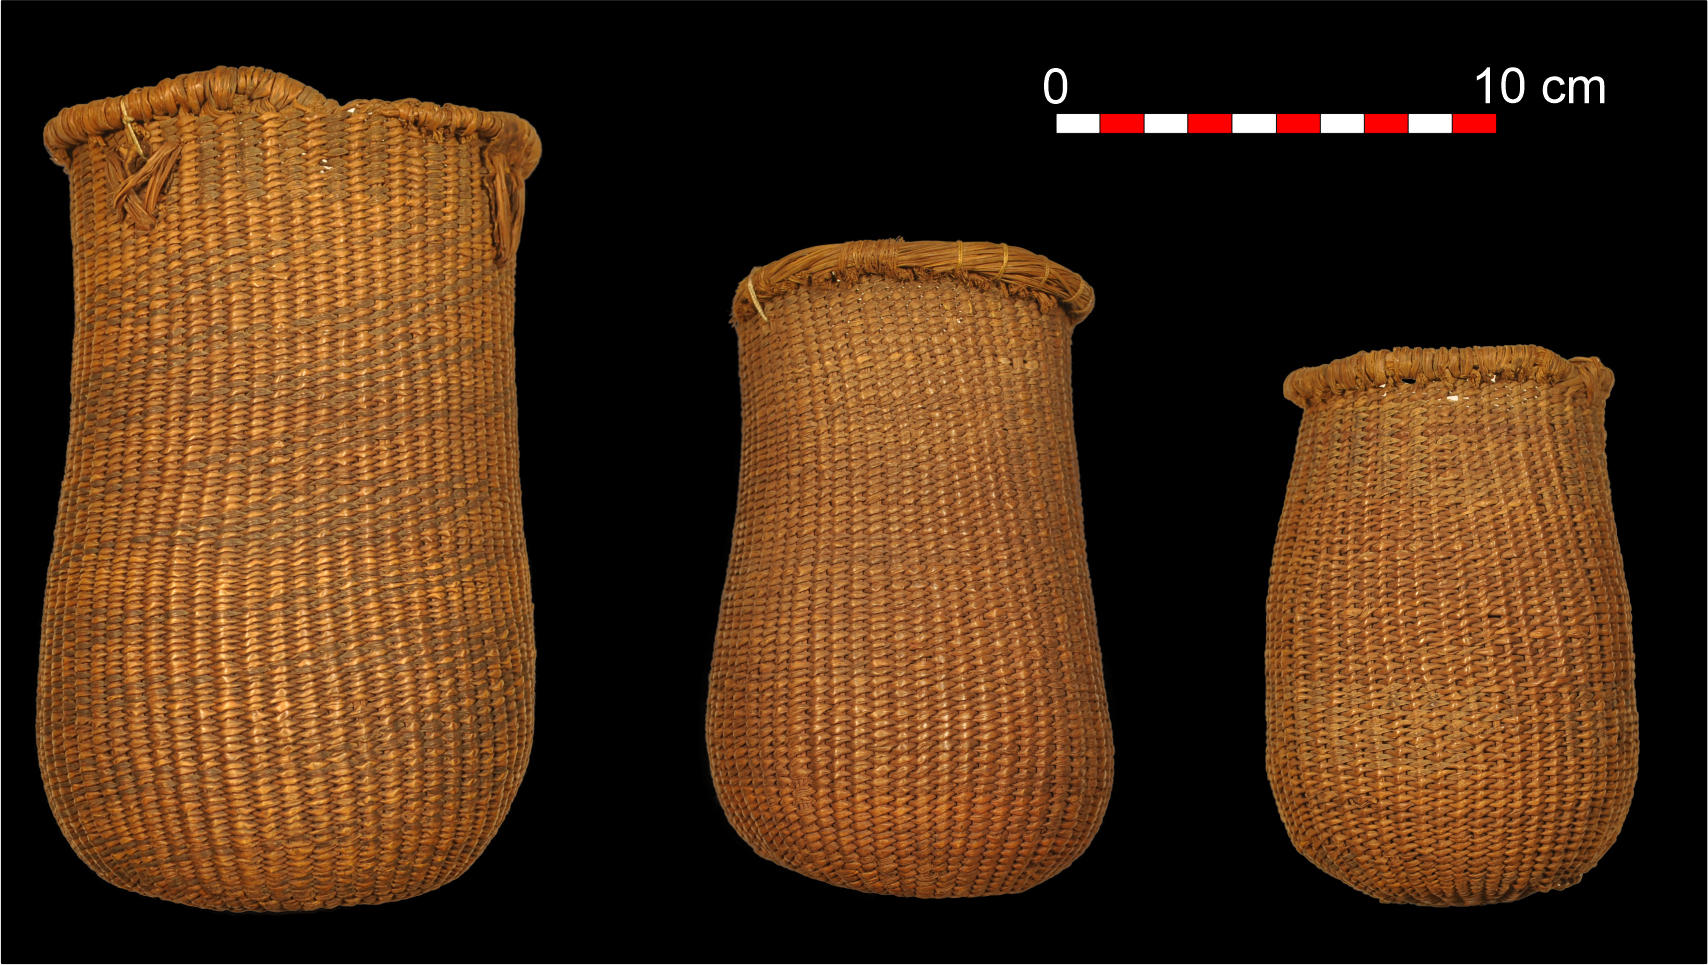 Oldest-Mesolithic-Baskets.jpg